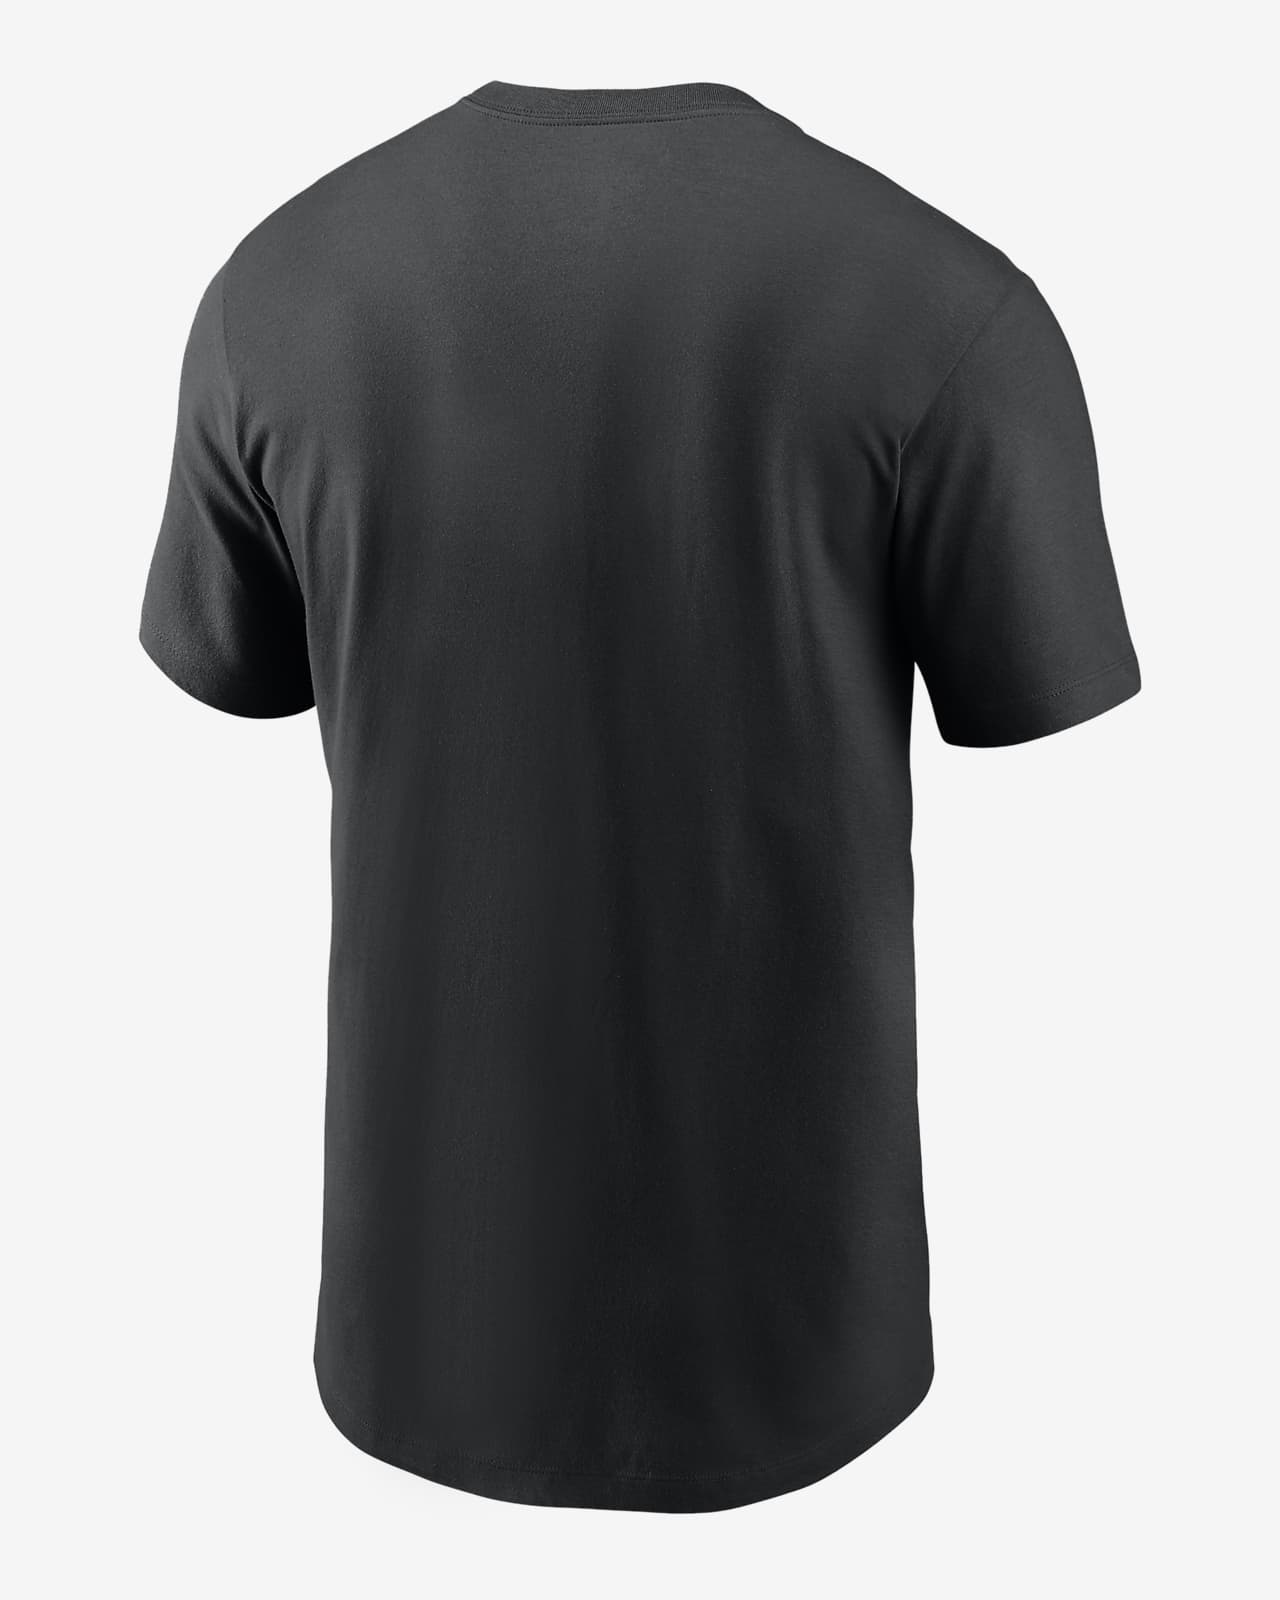 Nike City Connect Wordmark (MLB Miami Marlins) Women's T-Shirt